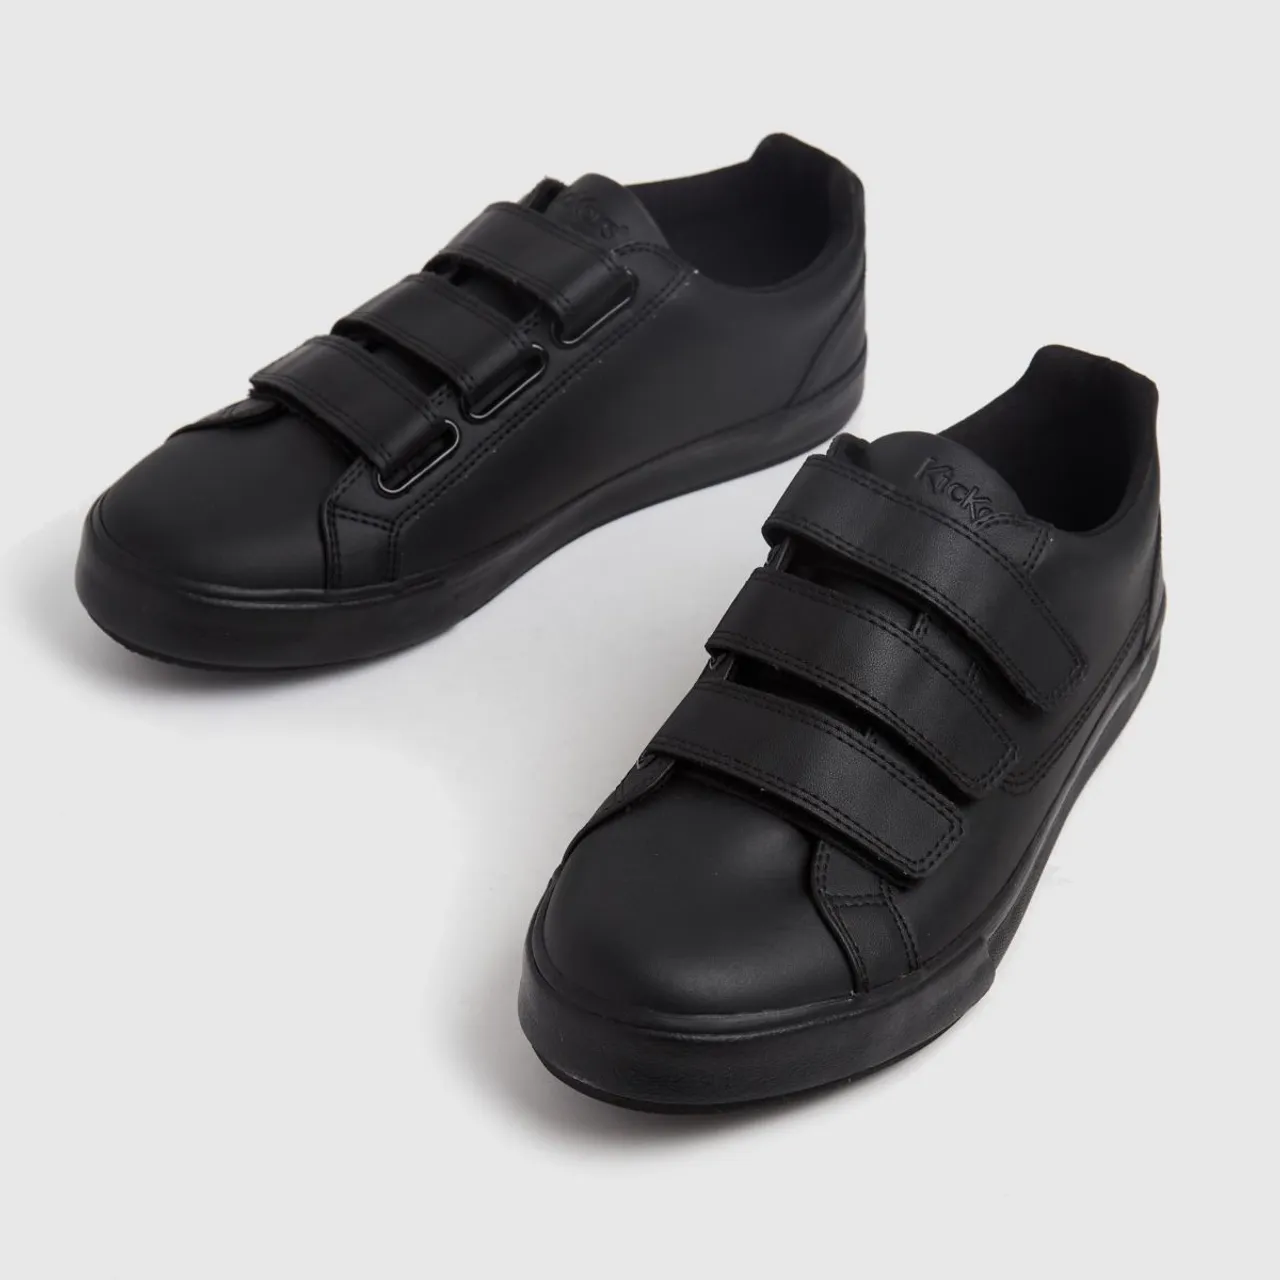 Kickers Tovni Trip Mono Shoes In Black